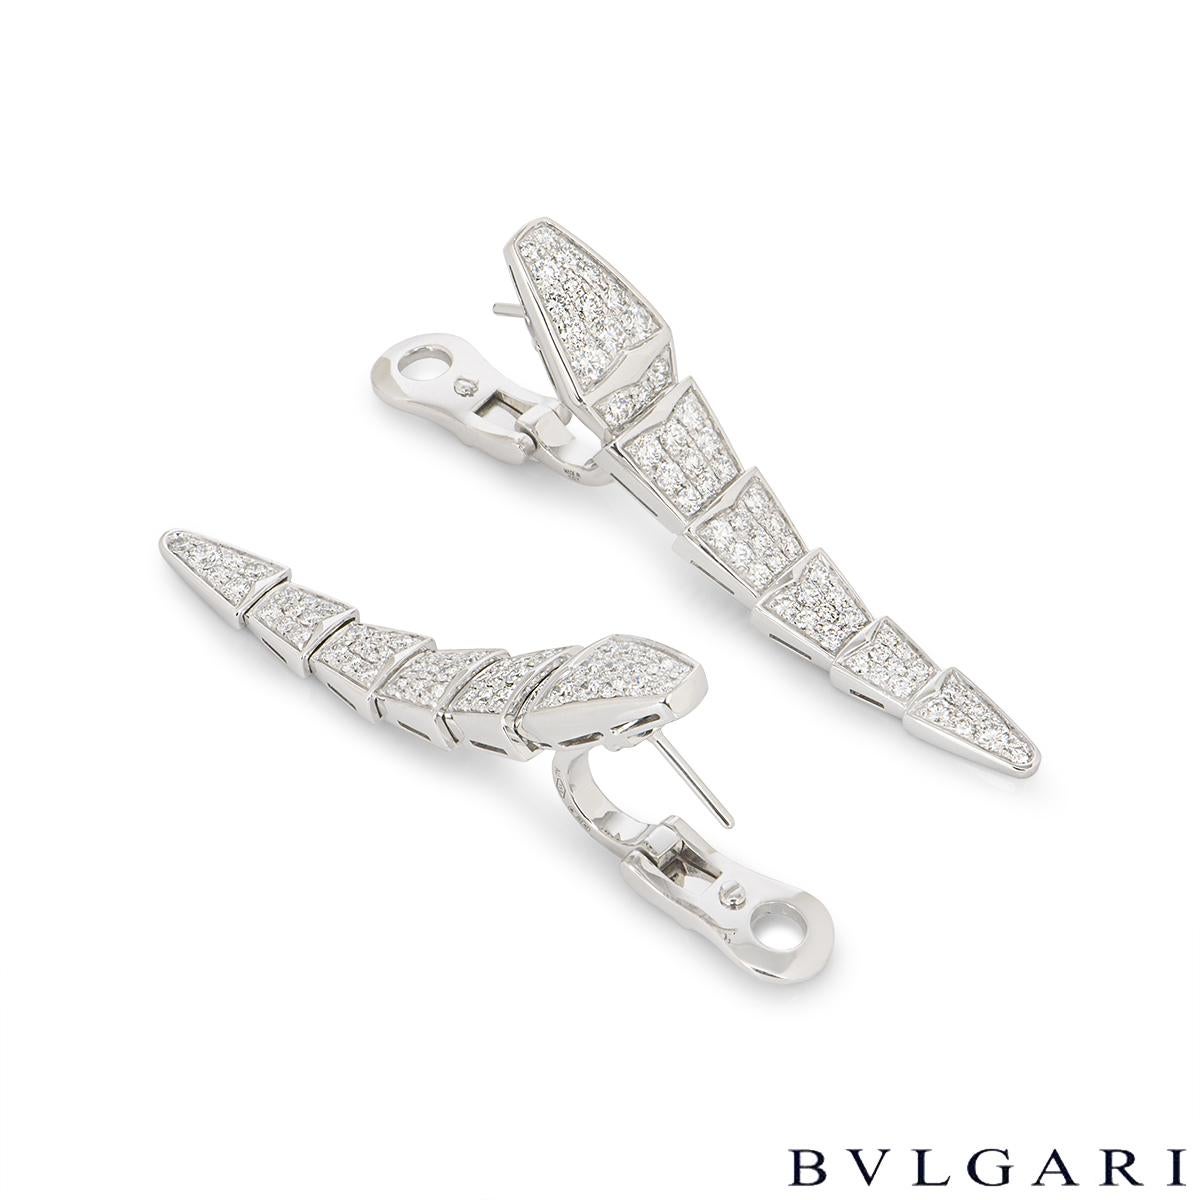 bvlgari viper earrings